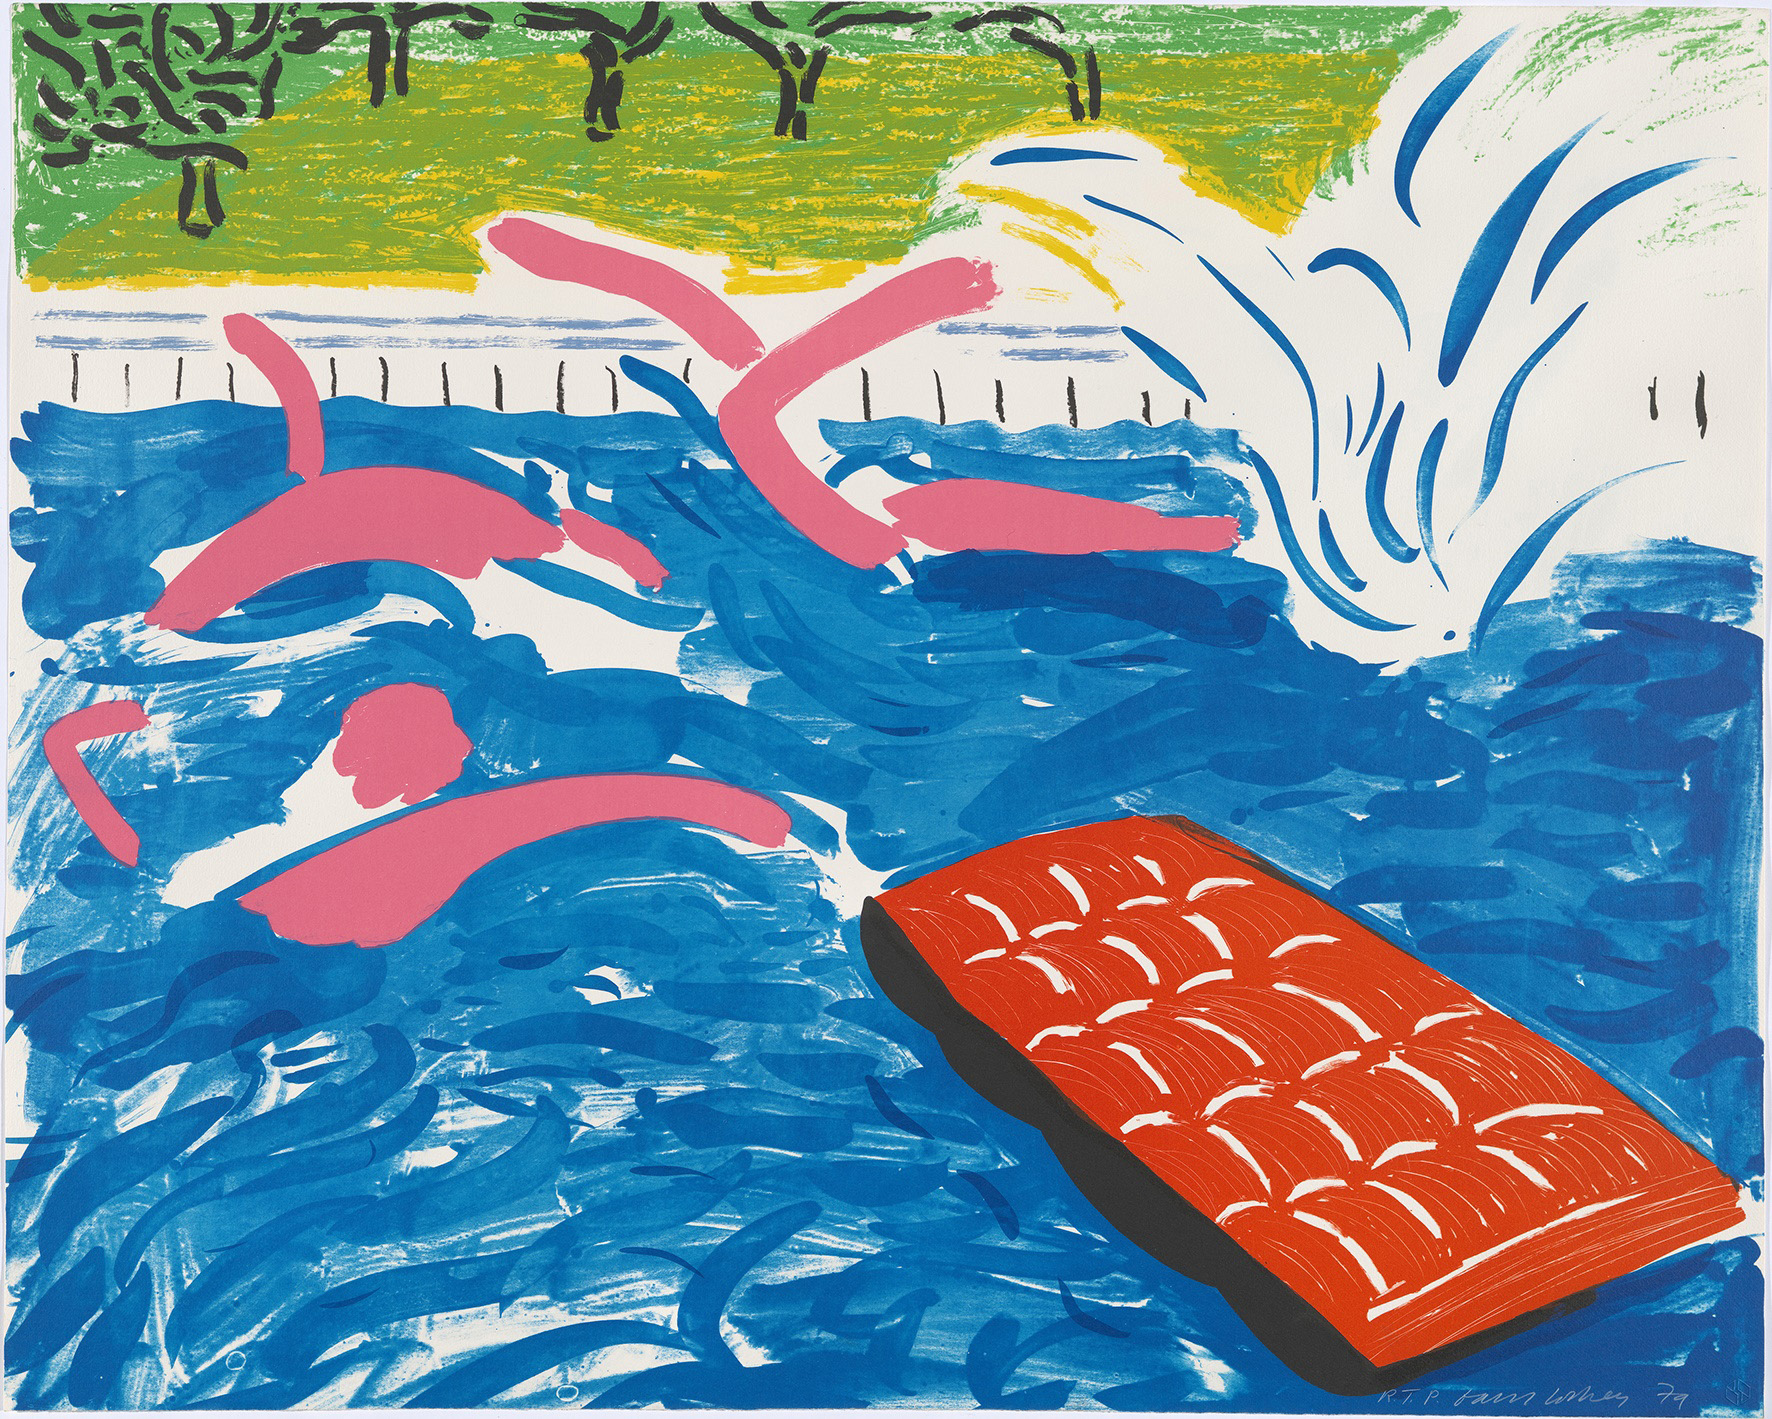 Print by David Hockney of a swimming pool scene.